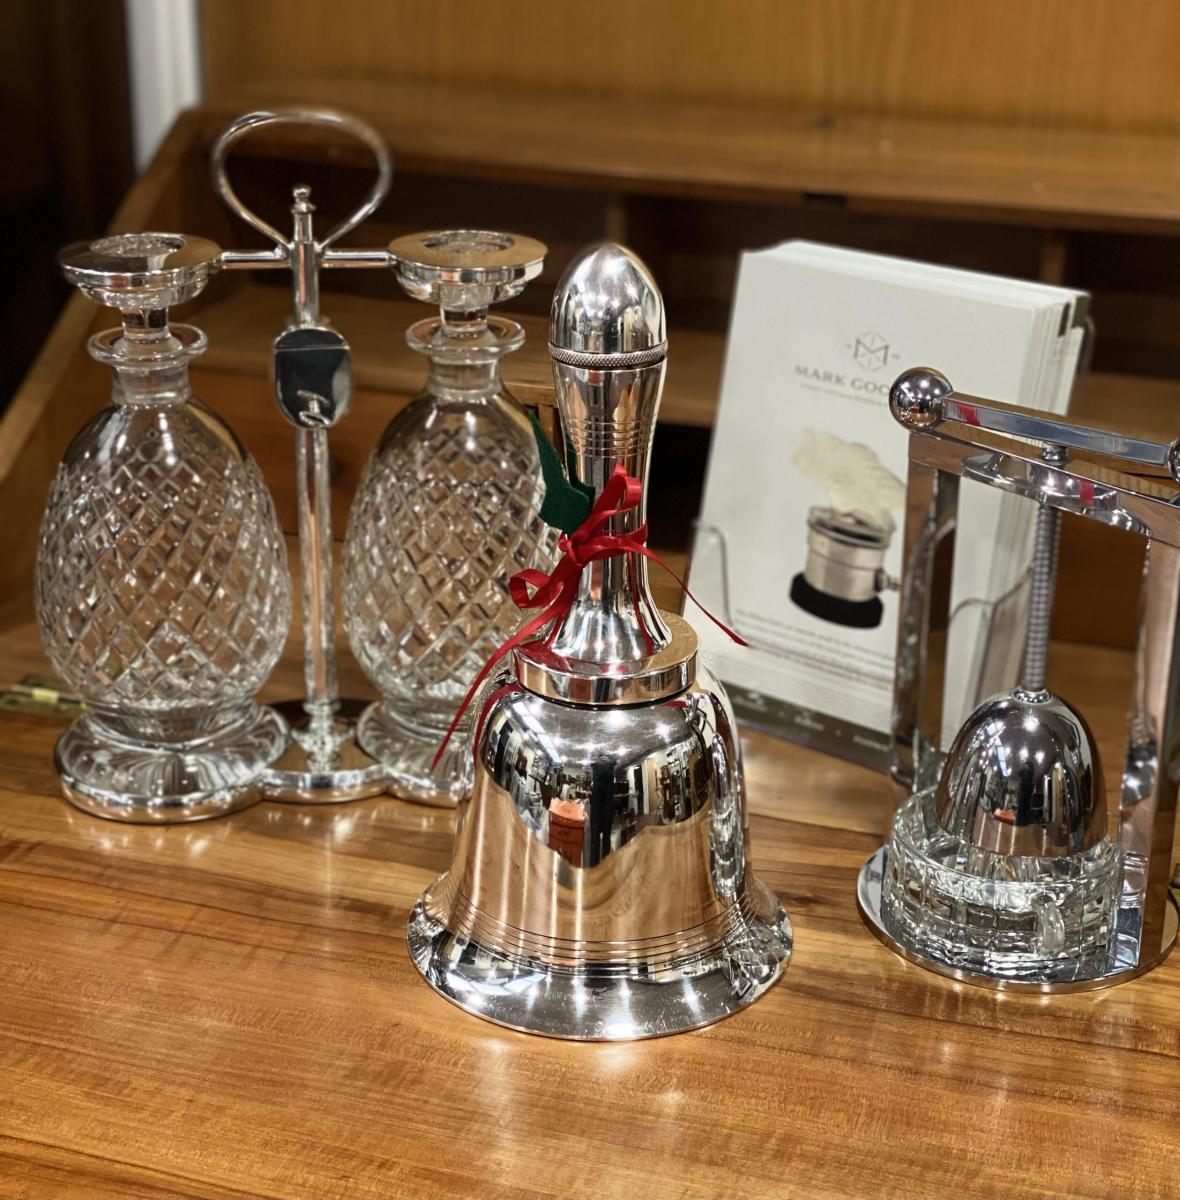 Aspreys Joy Bell Cocktail shaker in a decorative setting